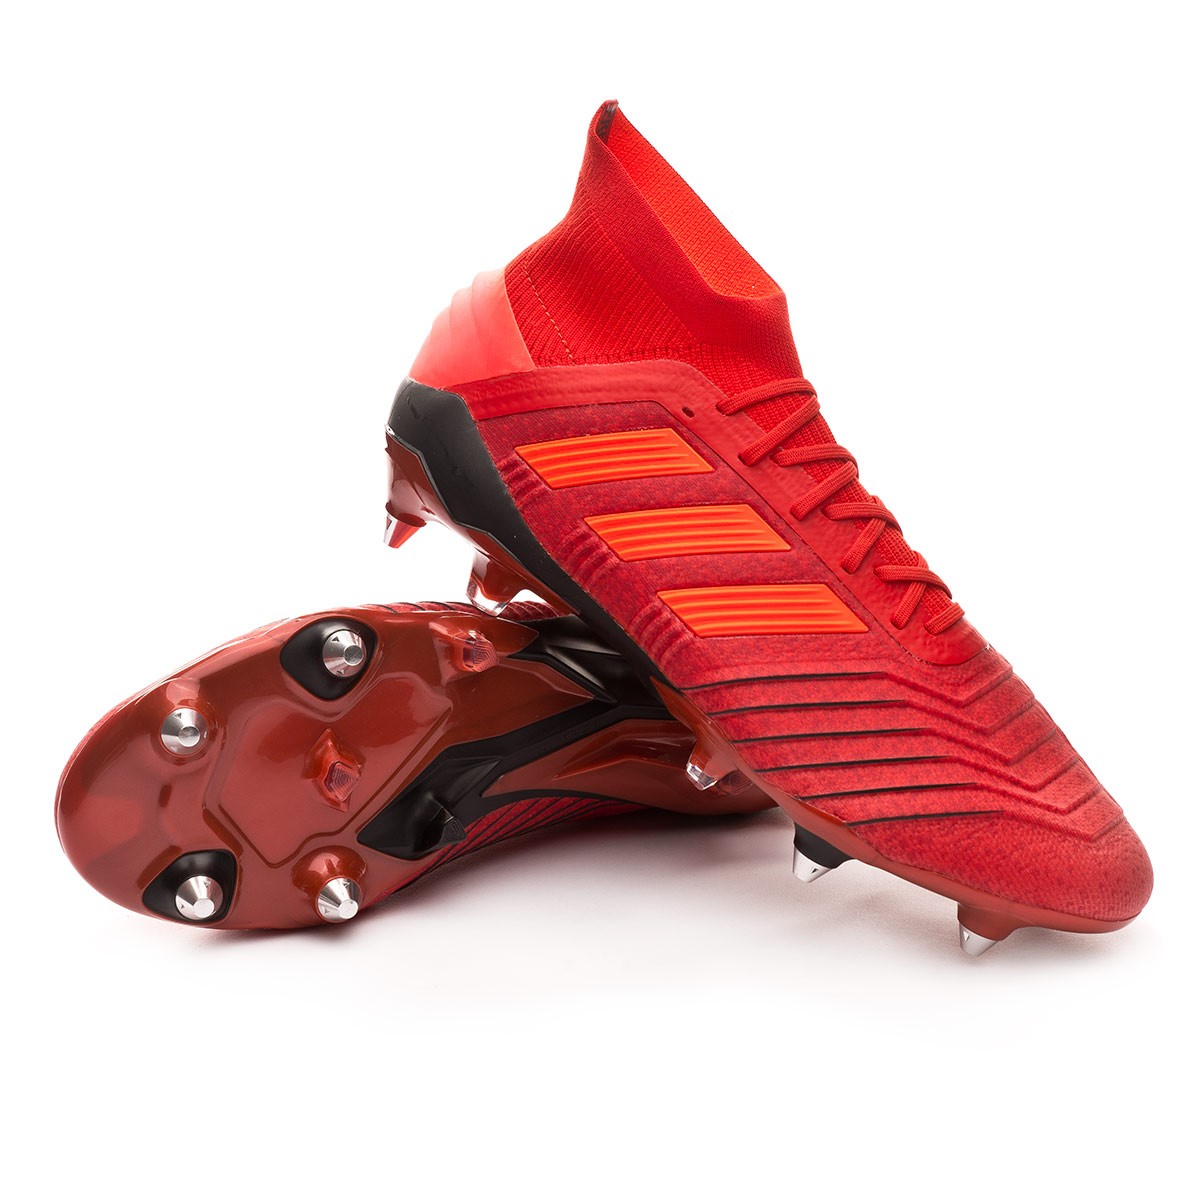 Bota de fútbol adidas Predator 19.1 SG Active red-Solar red-Core black -  Tienda de fútbol Fútbol Emotion